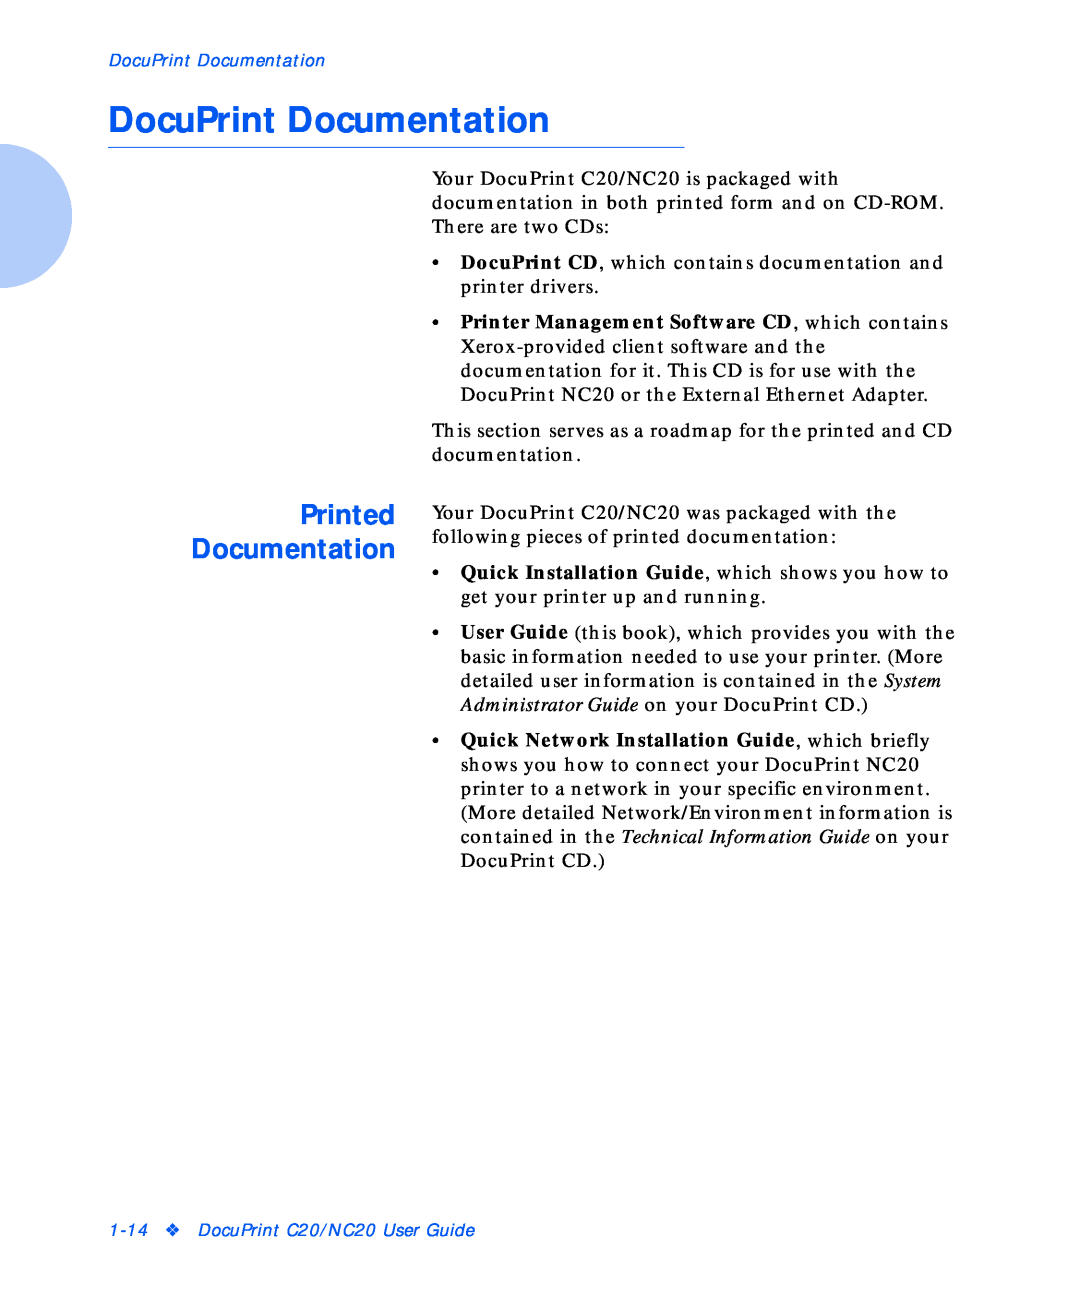 Xerox NC20 manual DocuPrint Documentation, Printed Documentation 